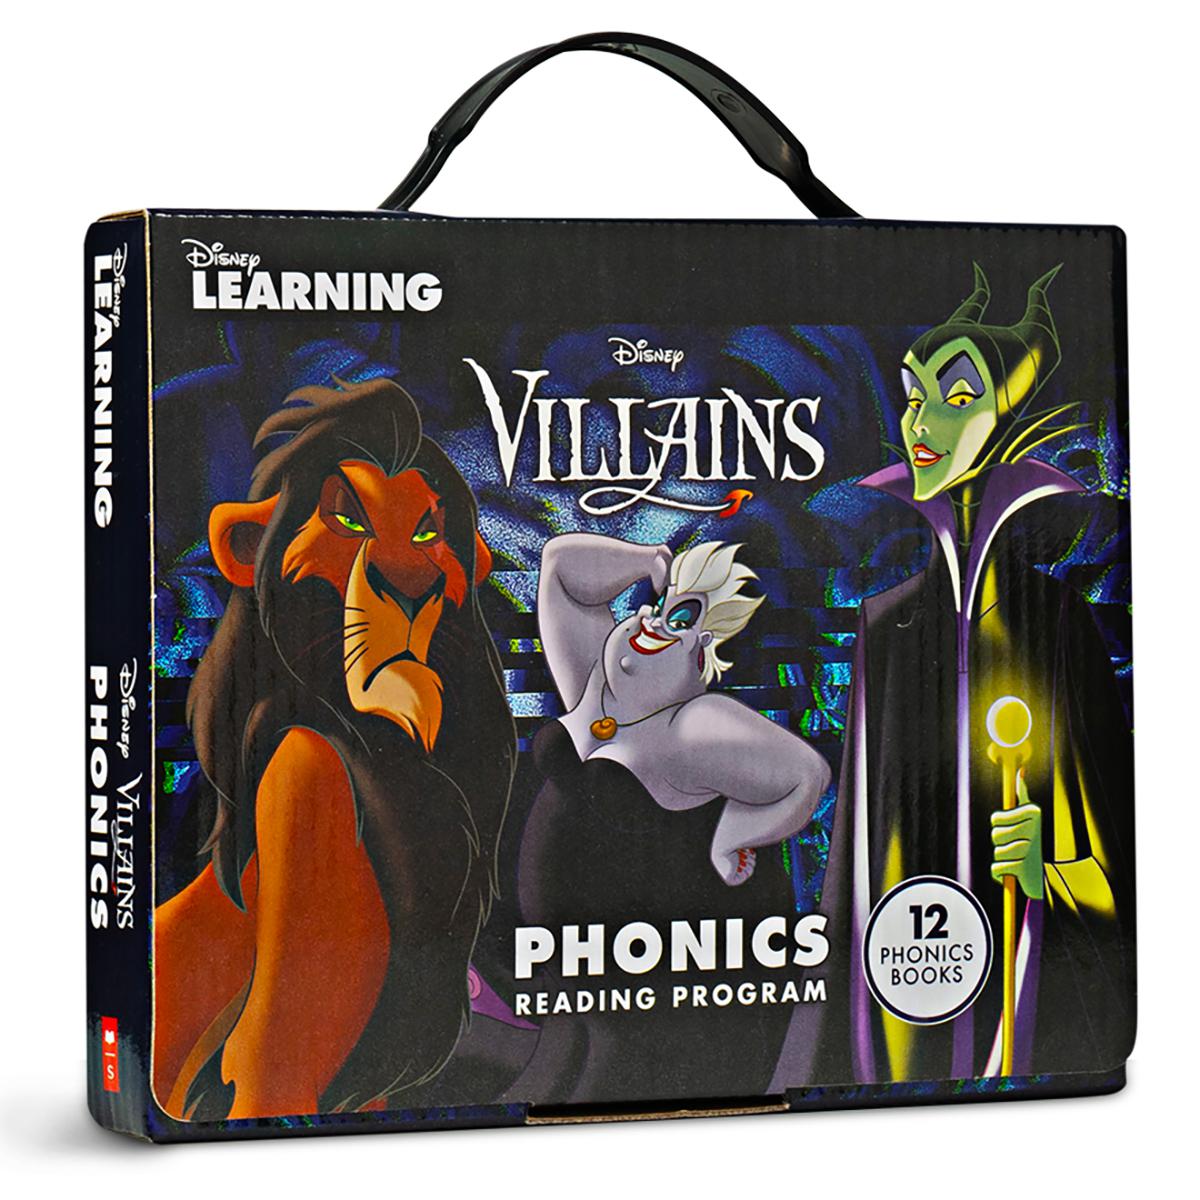  Disney Learning: Disney Villains Phonics Box 